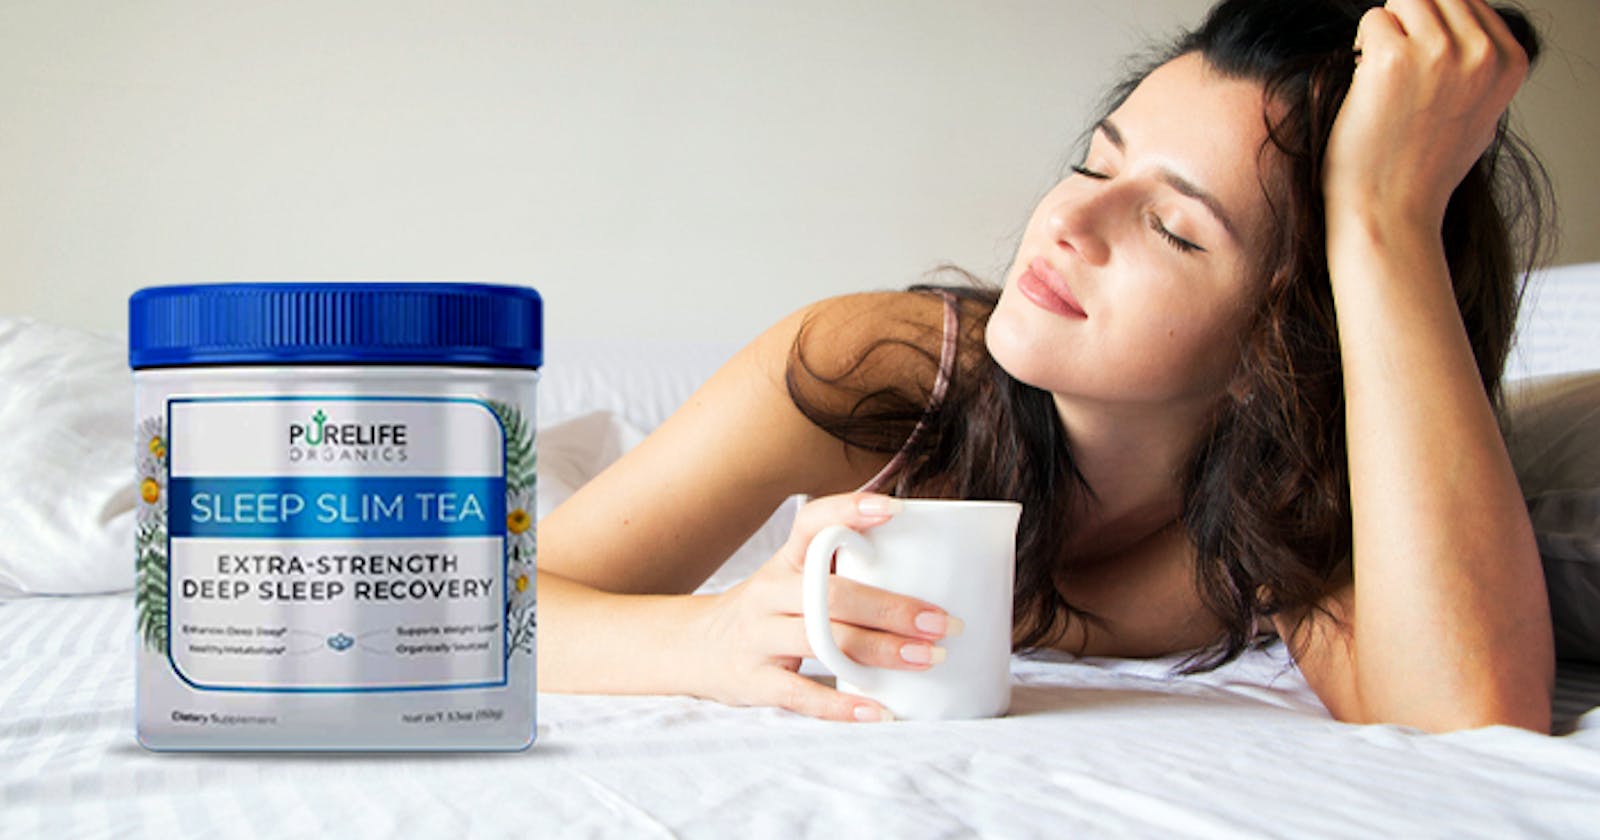 Purelife Organics Sleep Slim Tea – Cheap Scam Brand Or Safe Product?